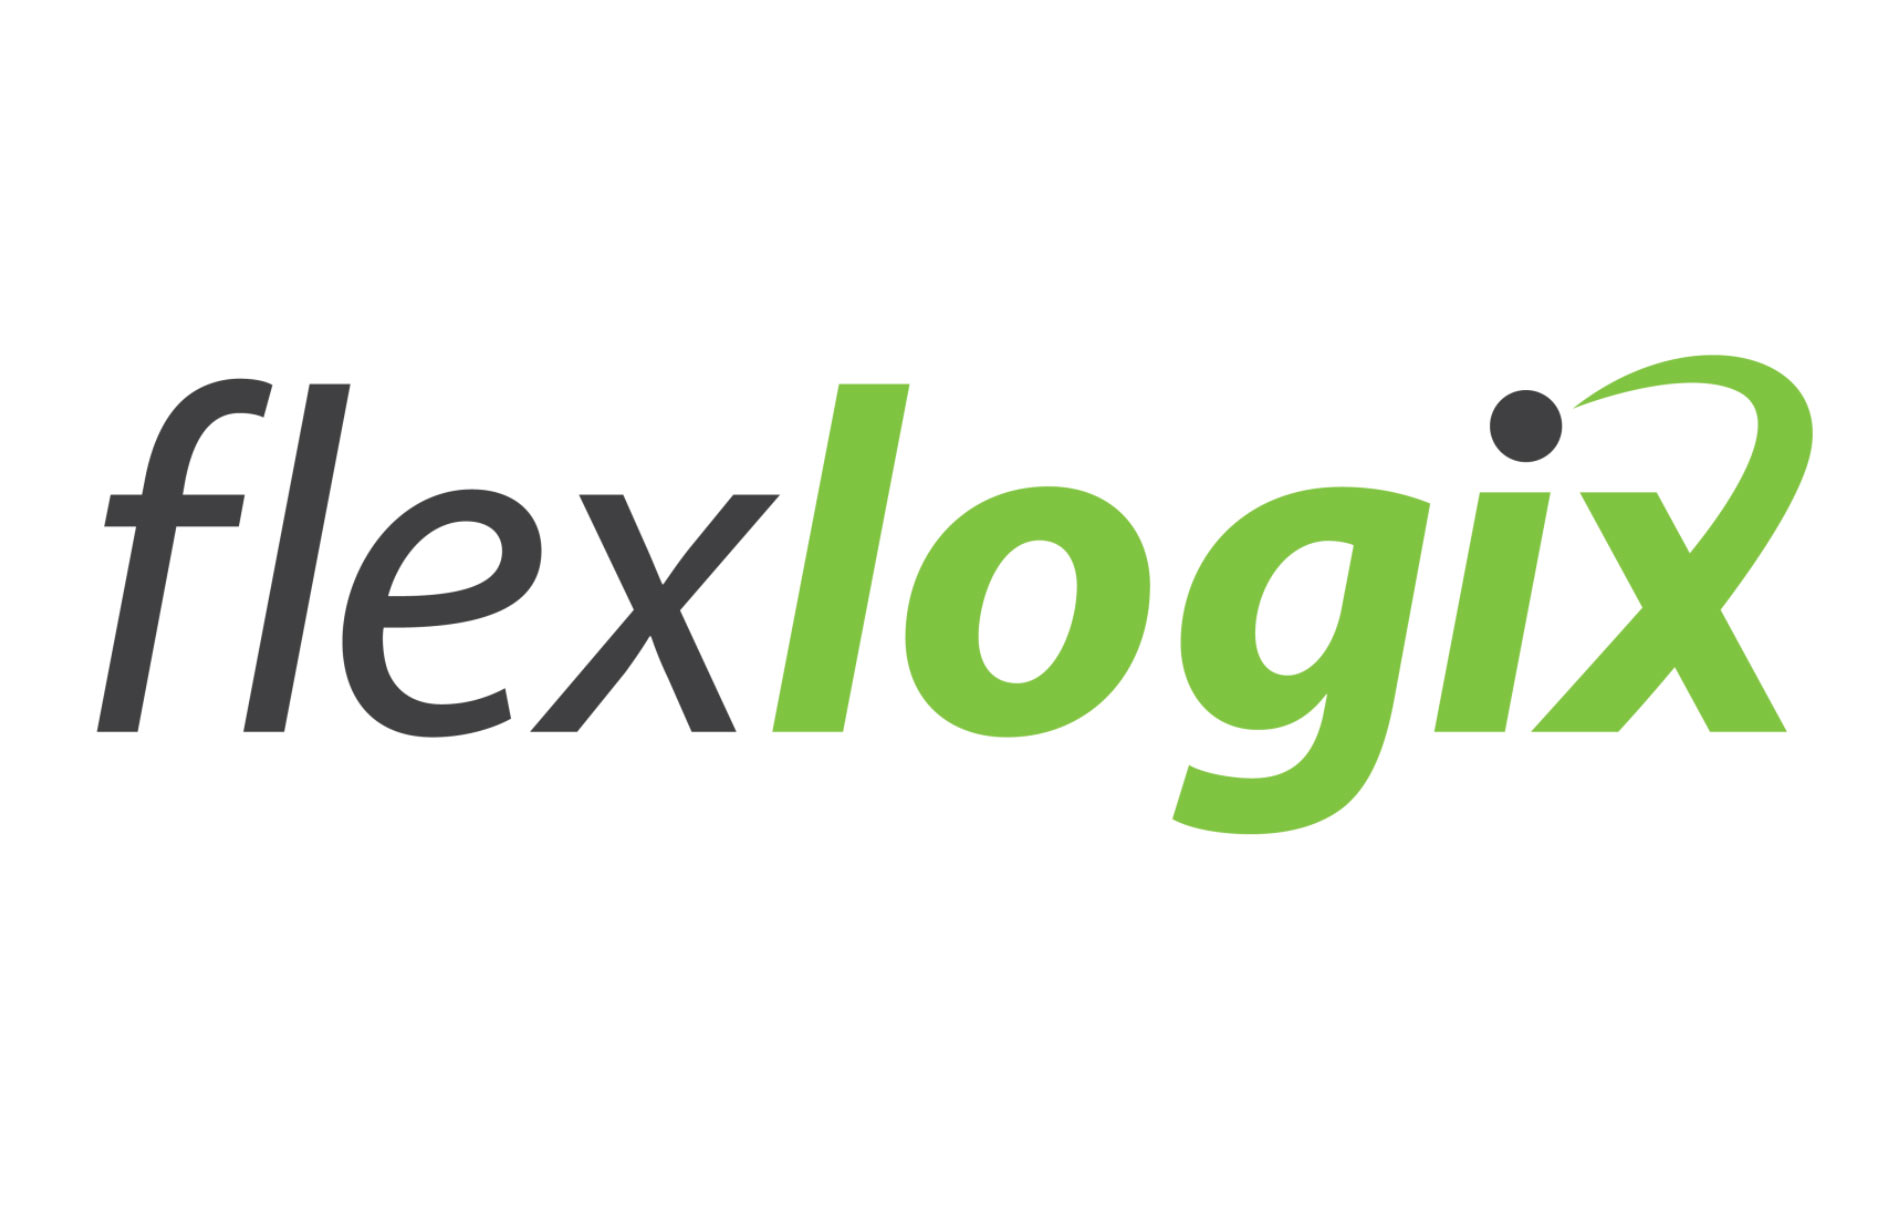 Flex Logix logo